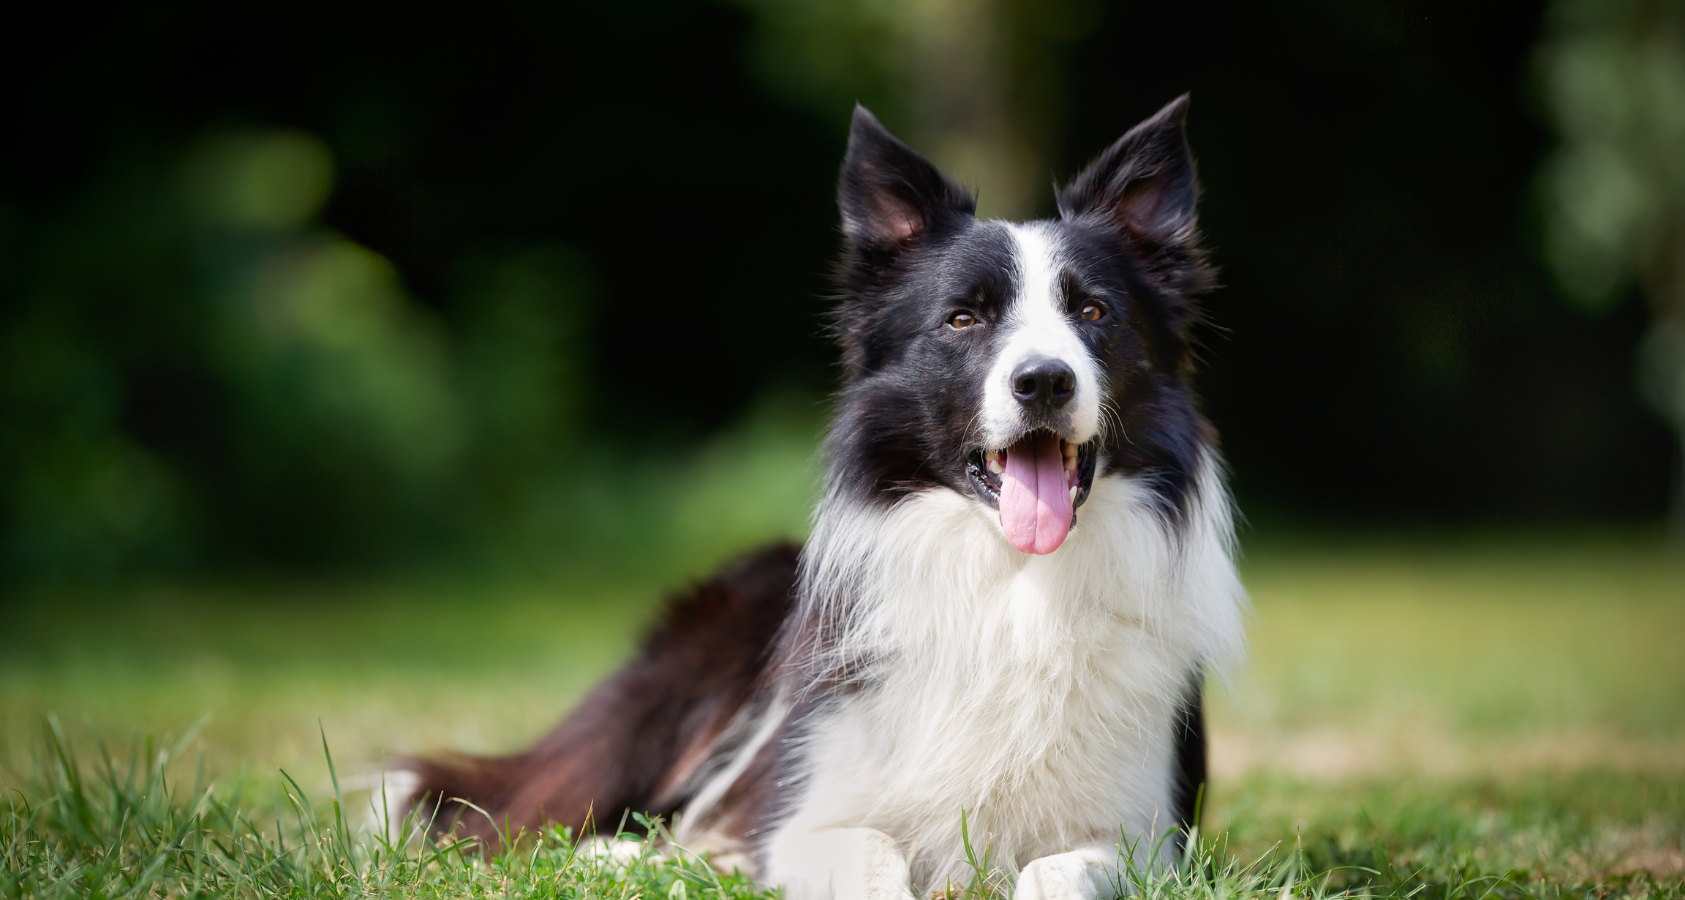 Top 10 Smartest and Most Intelligent Dog Breeds